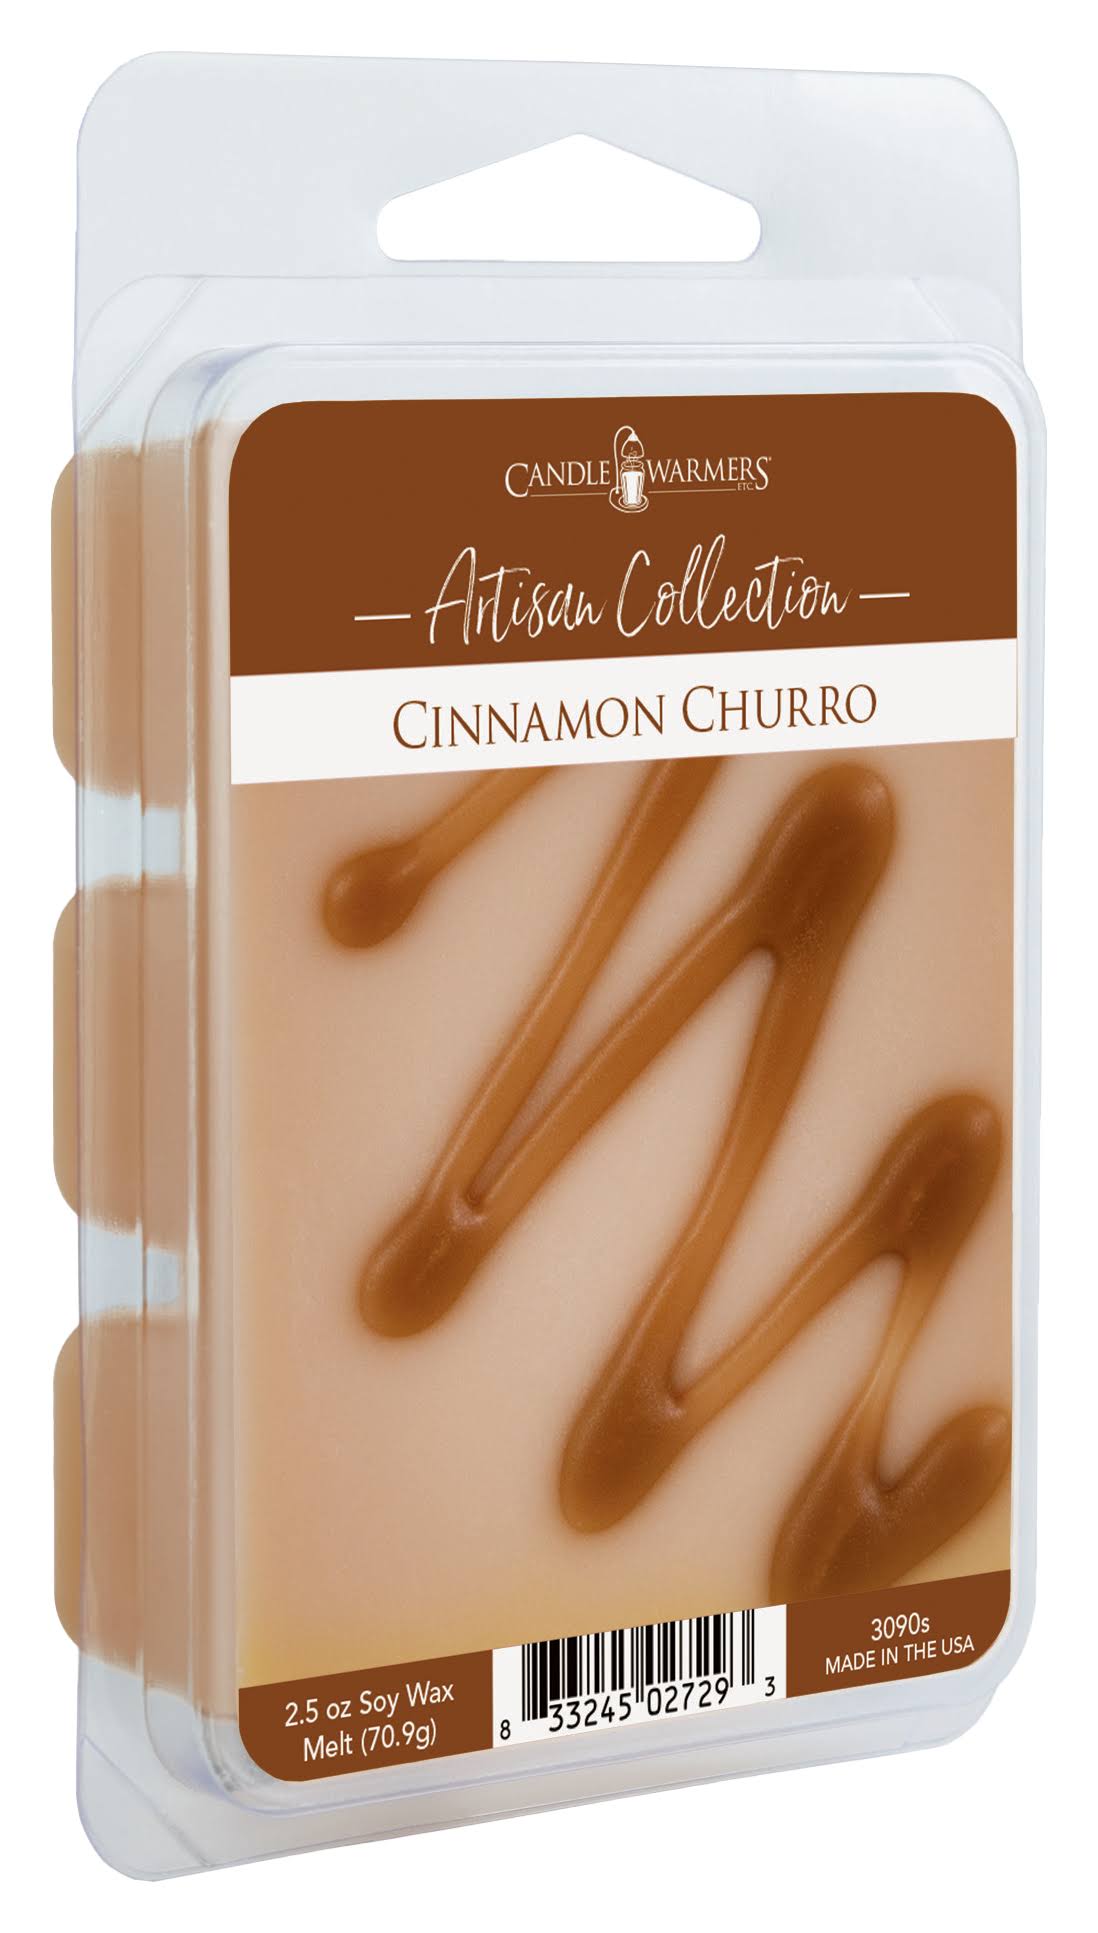 Candle Warmers Artisan Collection Soy Wax Melt, Cinnamon Churro - 2.5 oz